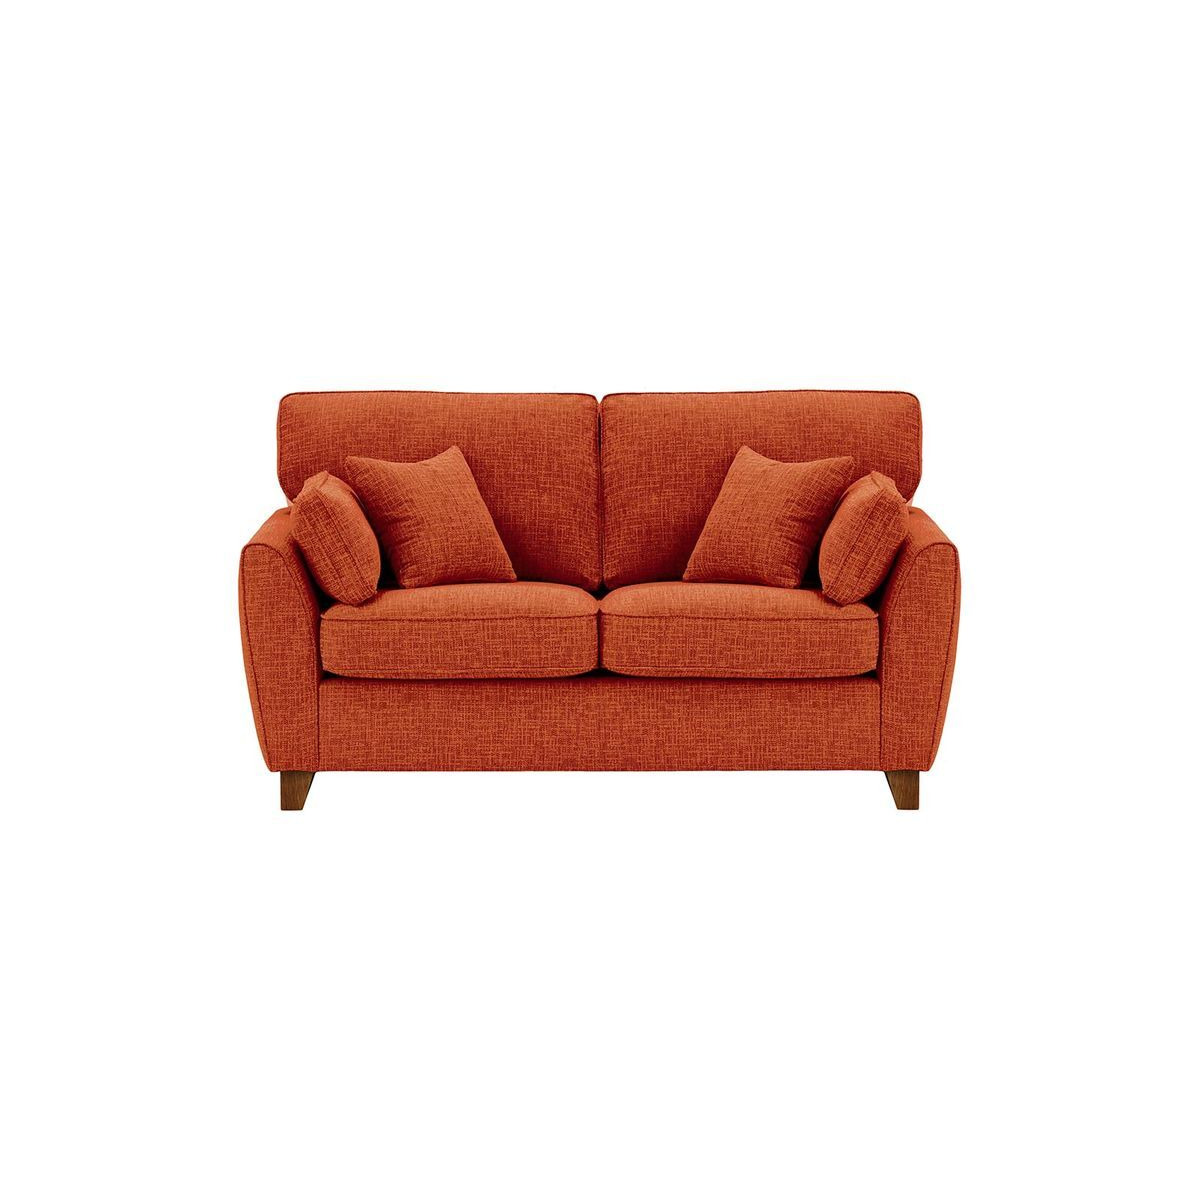 James 2 Seater Sofa, burnt orange, Leg colour: dark oak - image 1